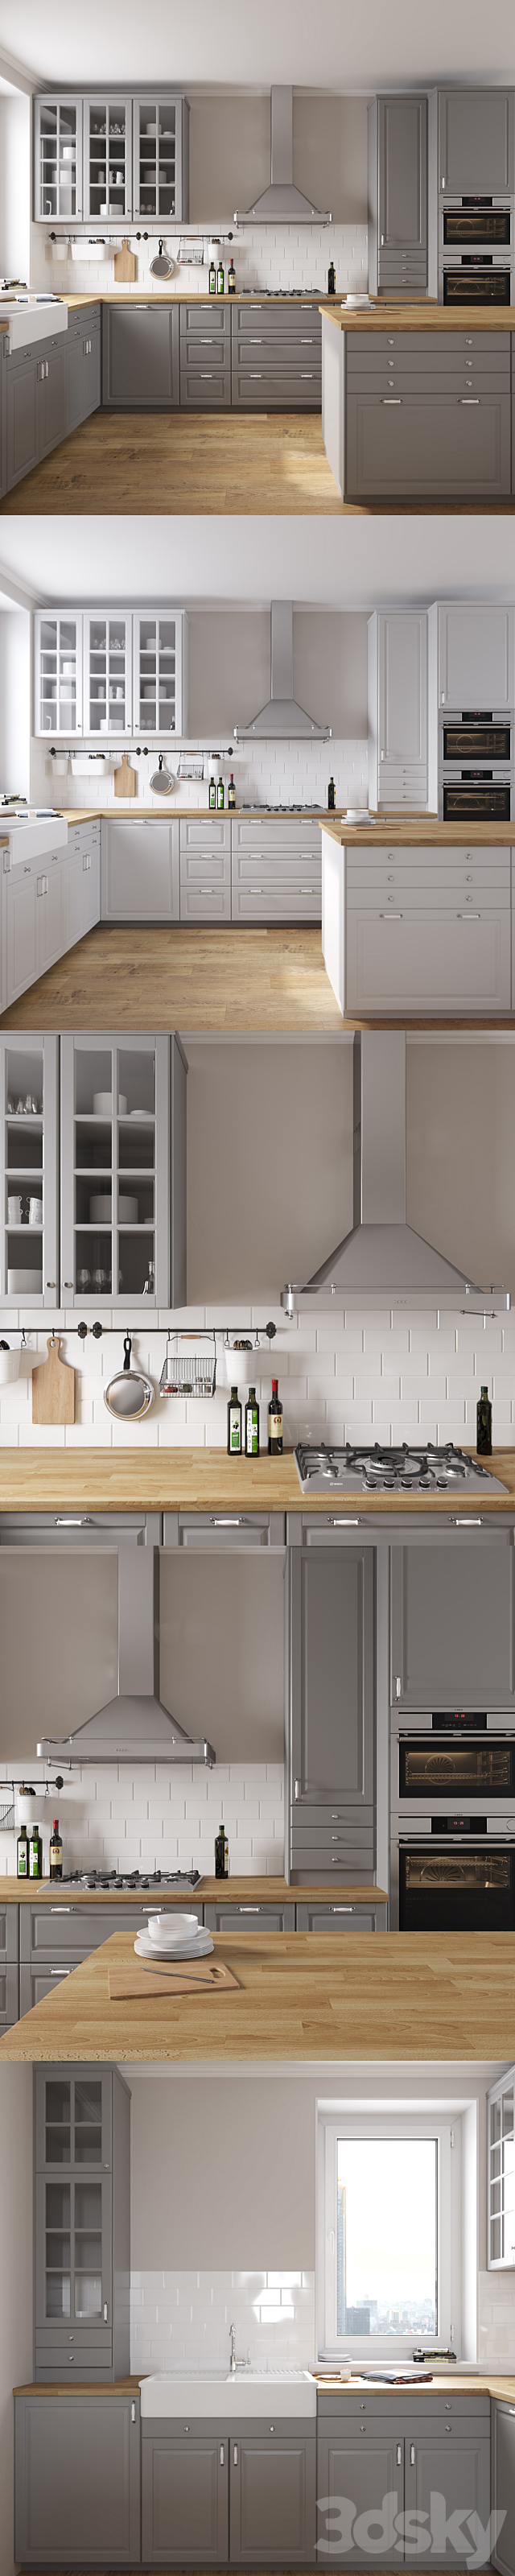 Kitchen Visualizer Ikea - Best Mac Apps For Home Design Peatix